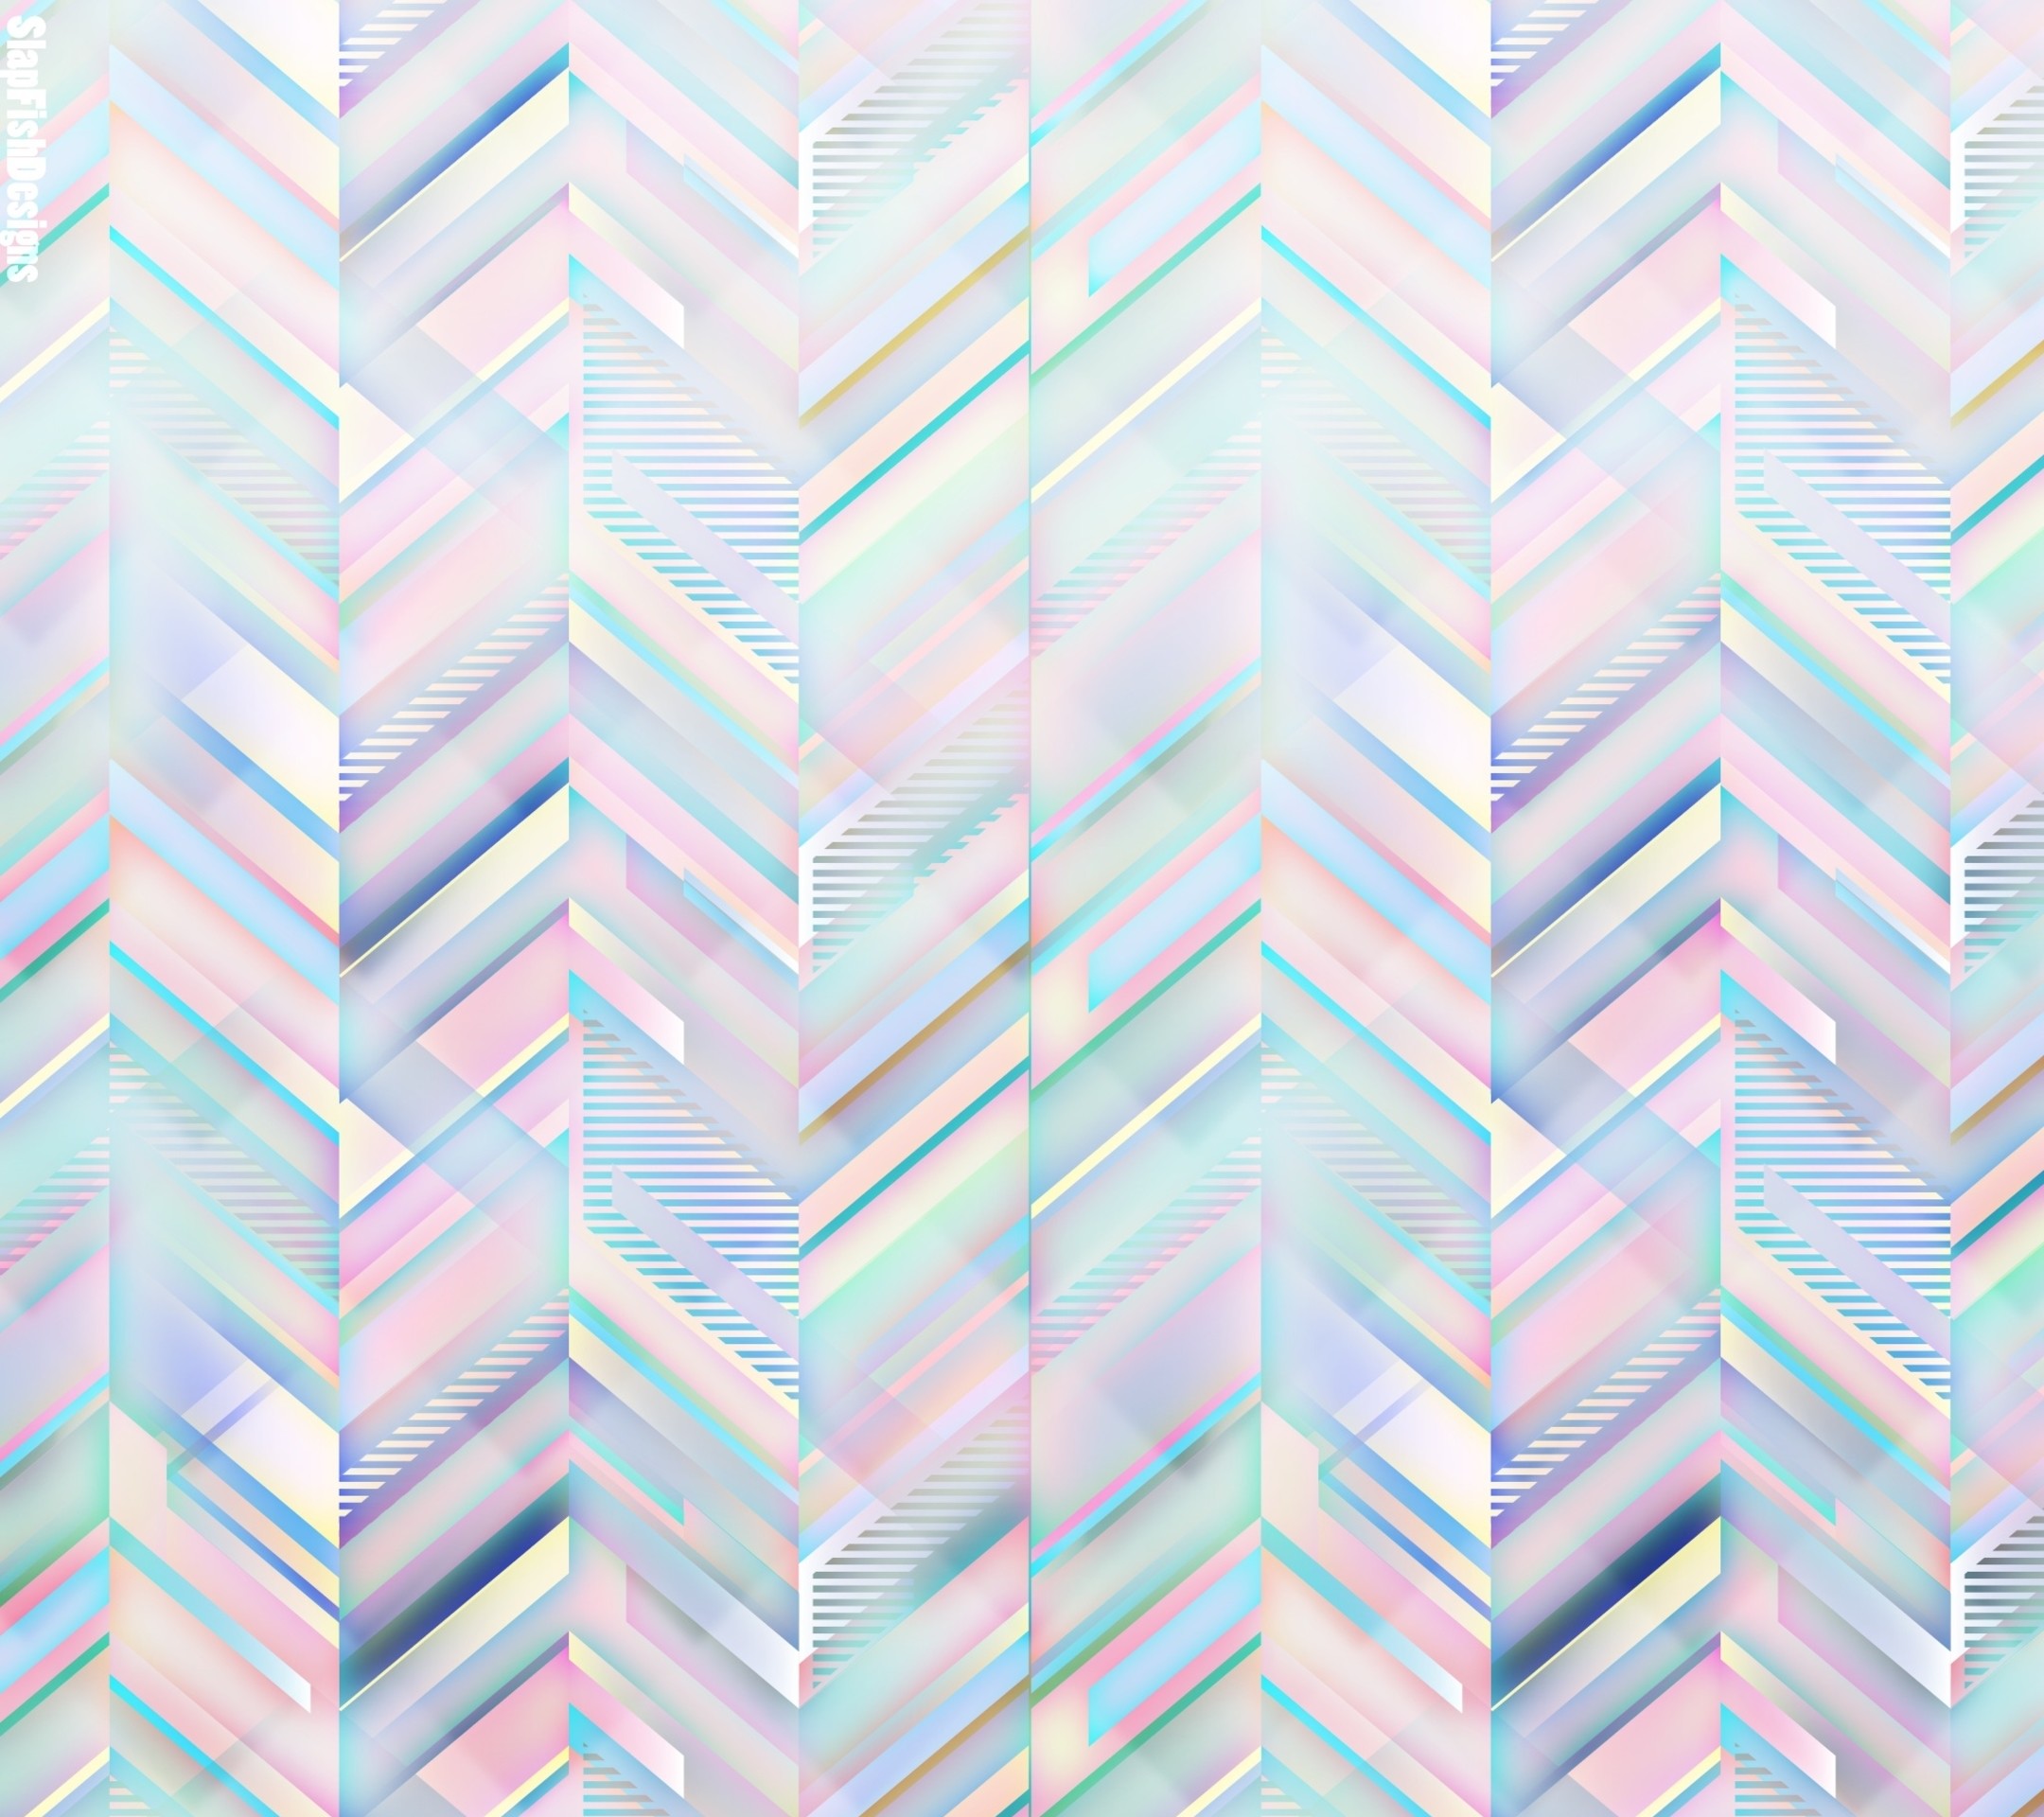 2160x1920 wallpaper tumblr patterns | Pattern Wallpapers Tumblr -wallpaper -hd-patterns_79-